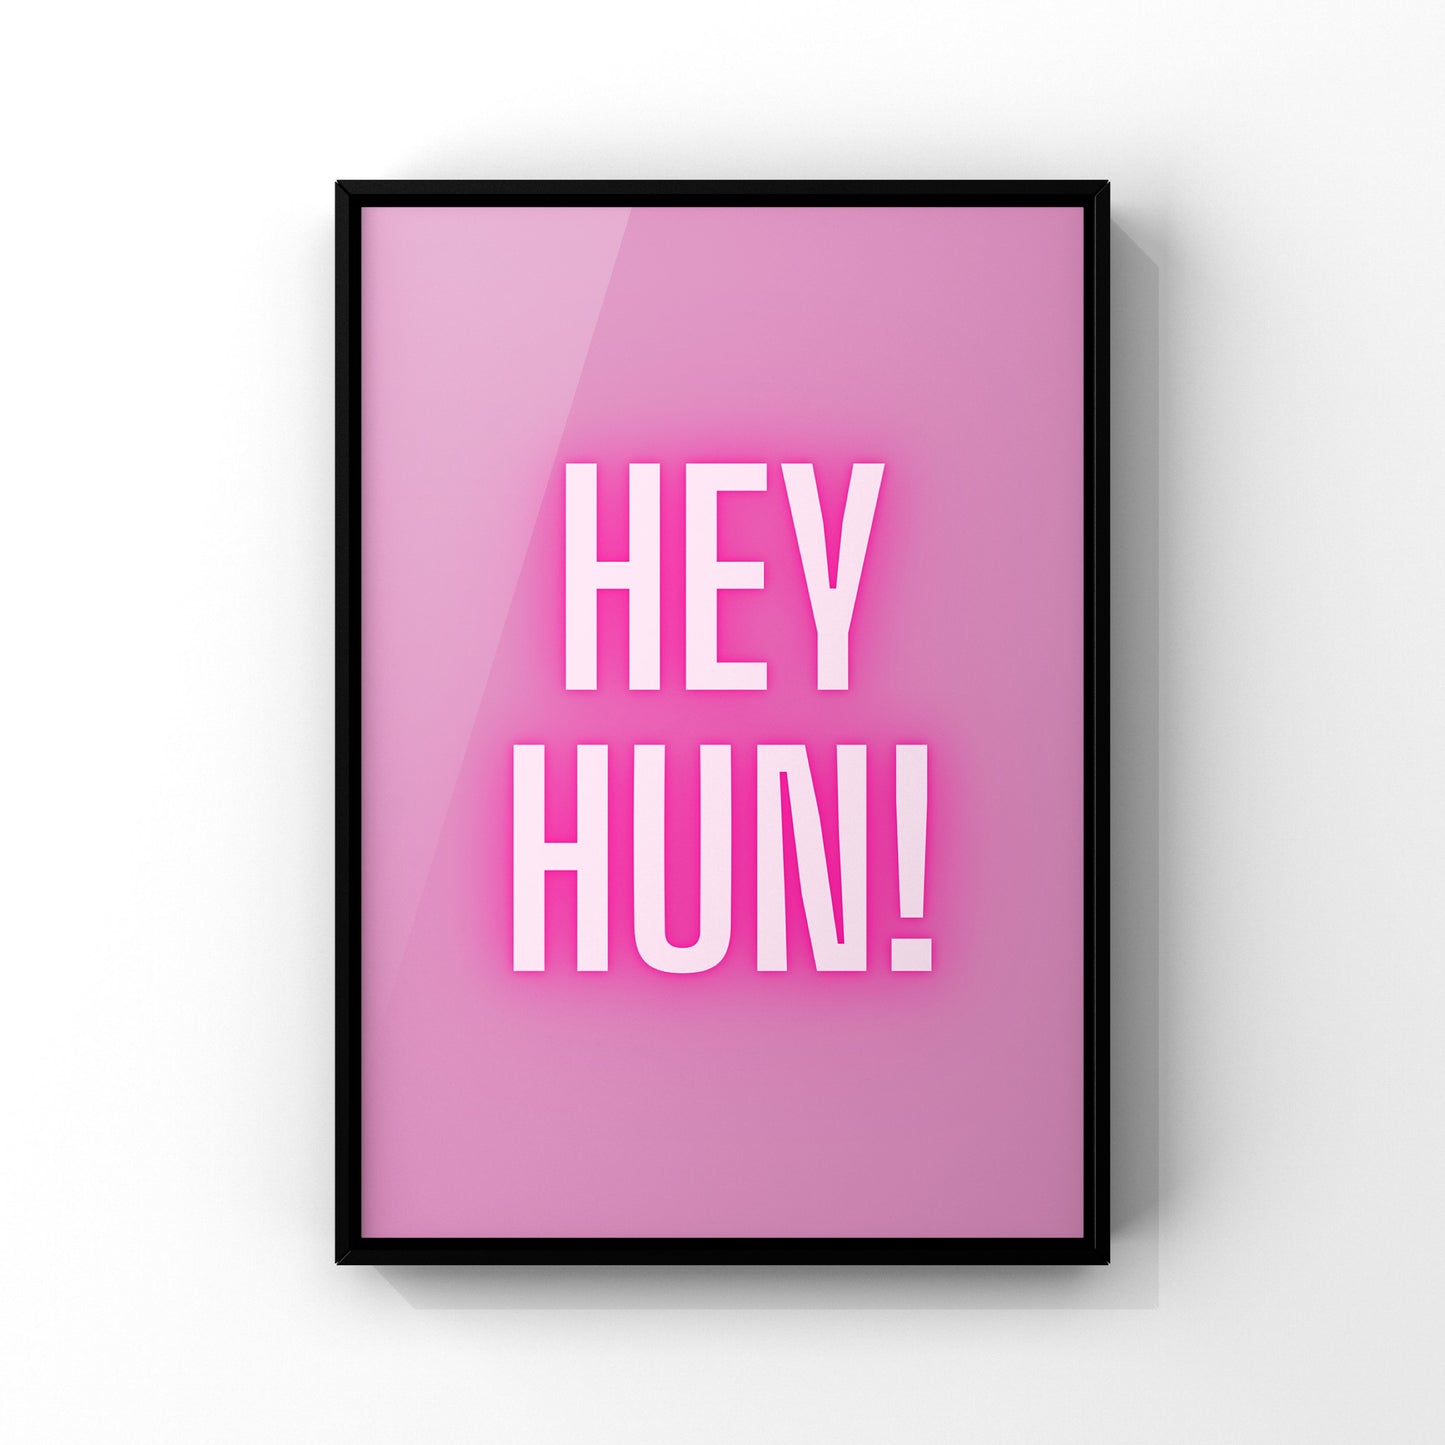 Hey hun!